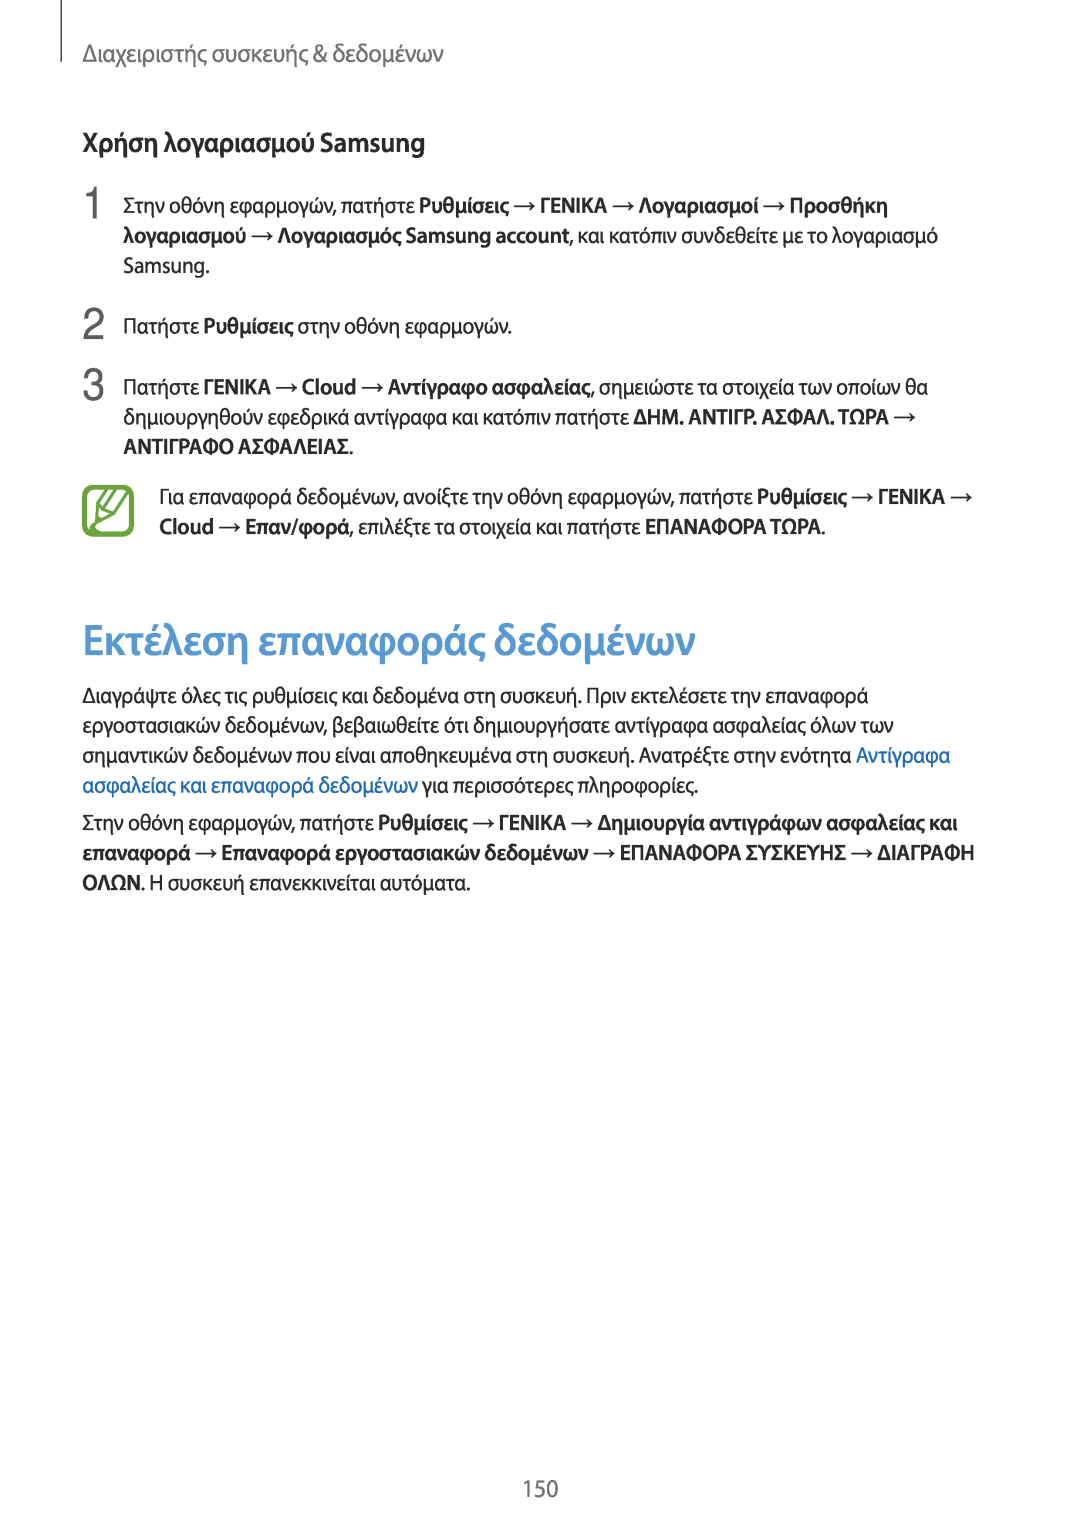 Samsung SM-T805NTSAEUR manual Εκτέλεση επαναφοράς δεδομένων, Χρήση λογαριασμού Samsung, Διαχειριστής συσκευής & δεδομένων 